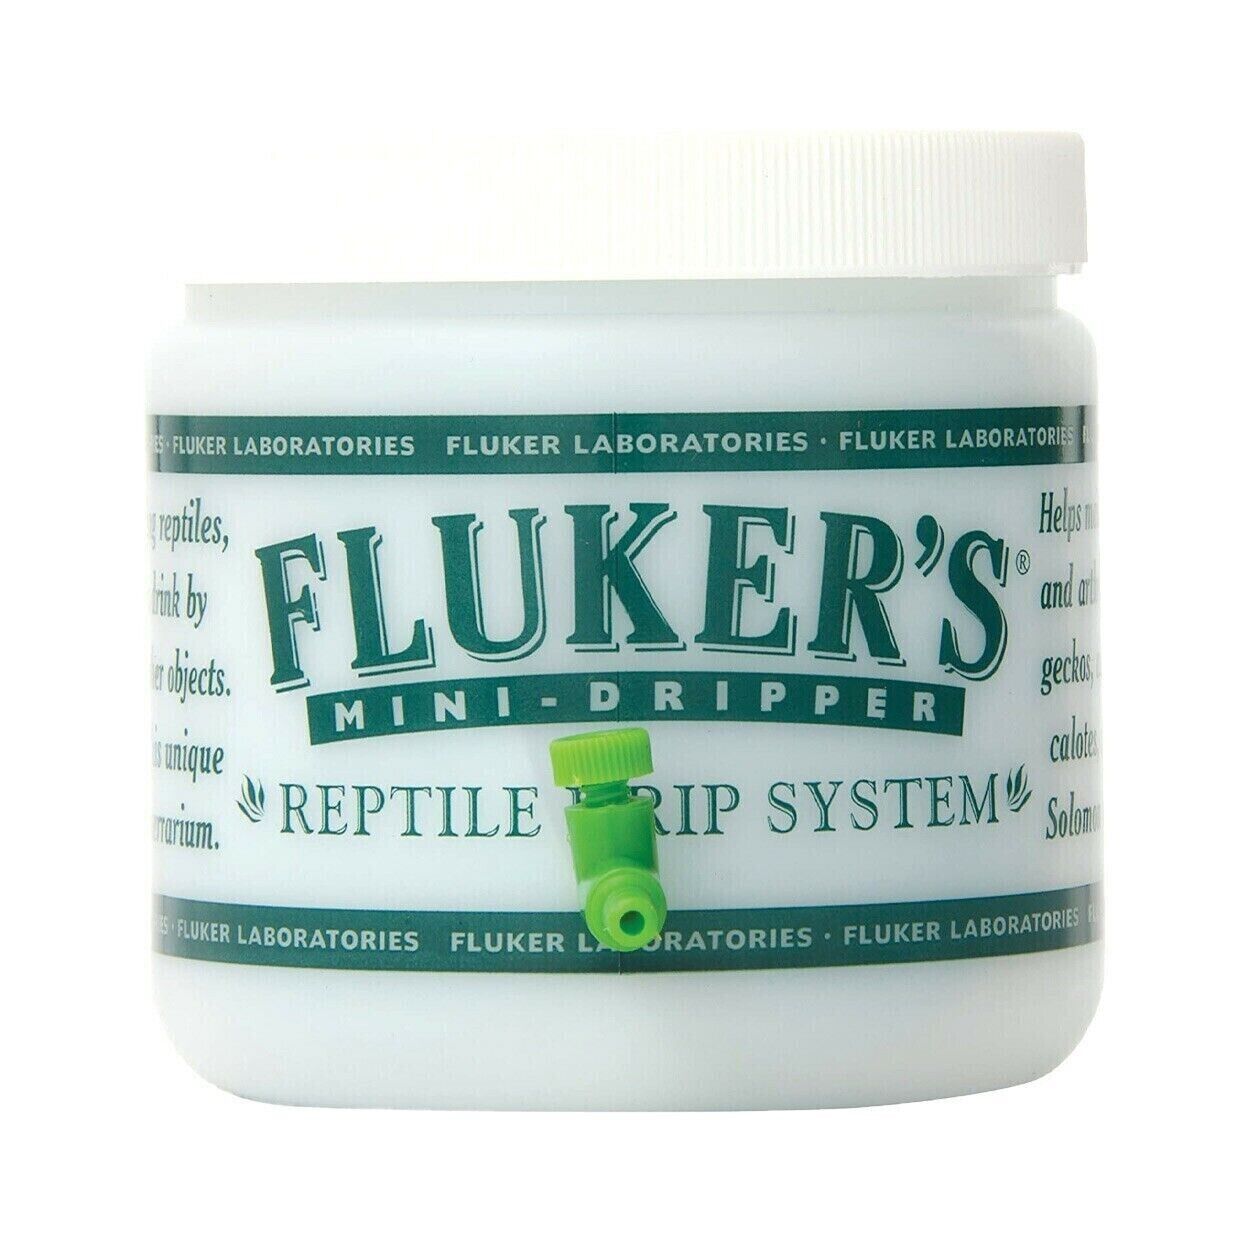 Fluker Laboratories 12 oz Mini Dripper Pet Reptile Moisture Wet Drip System NEW